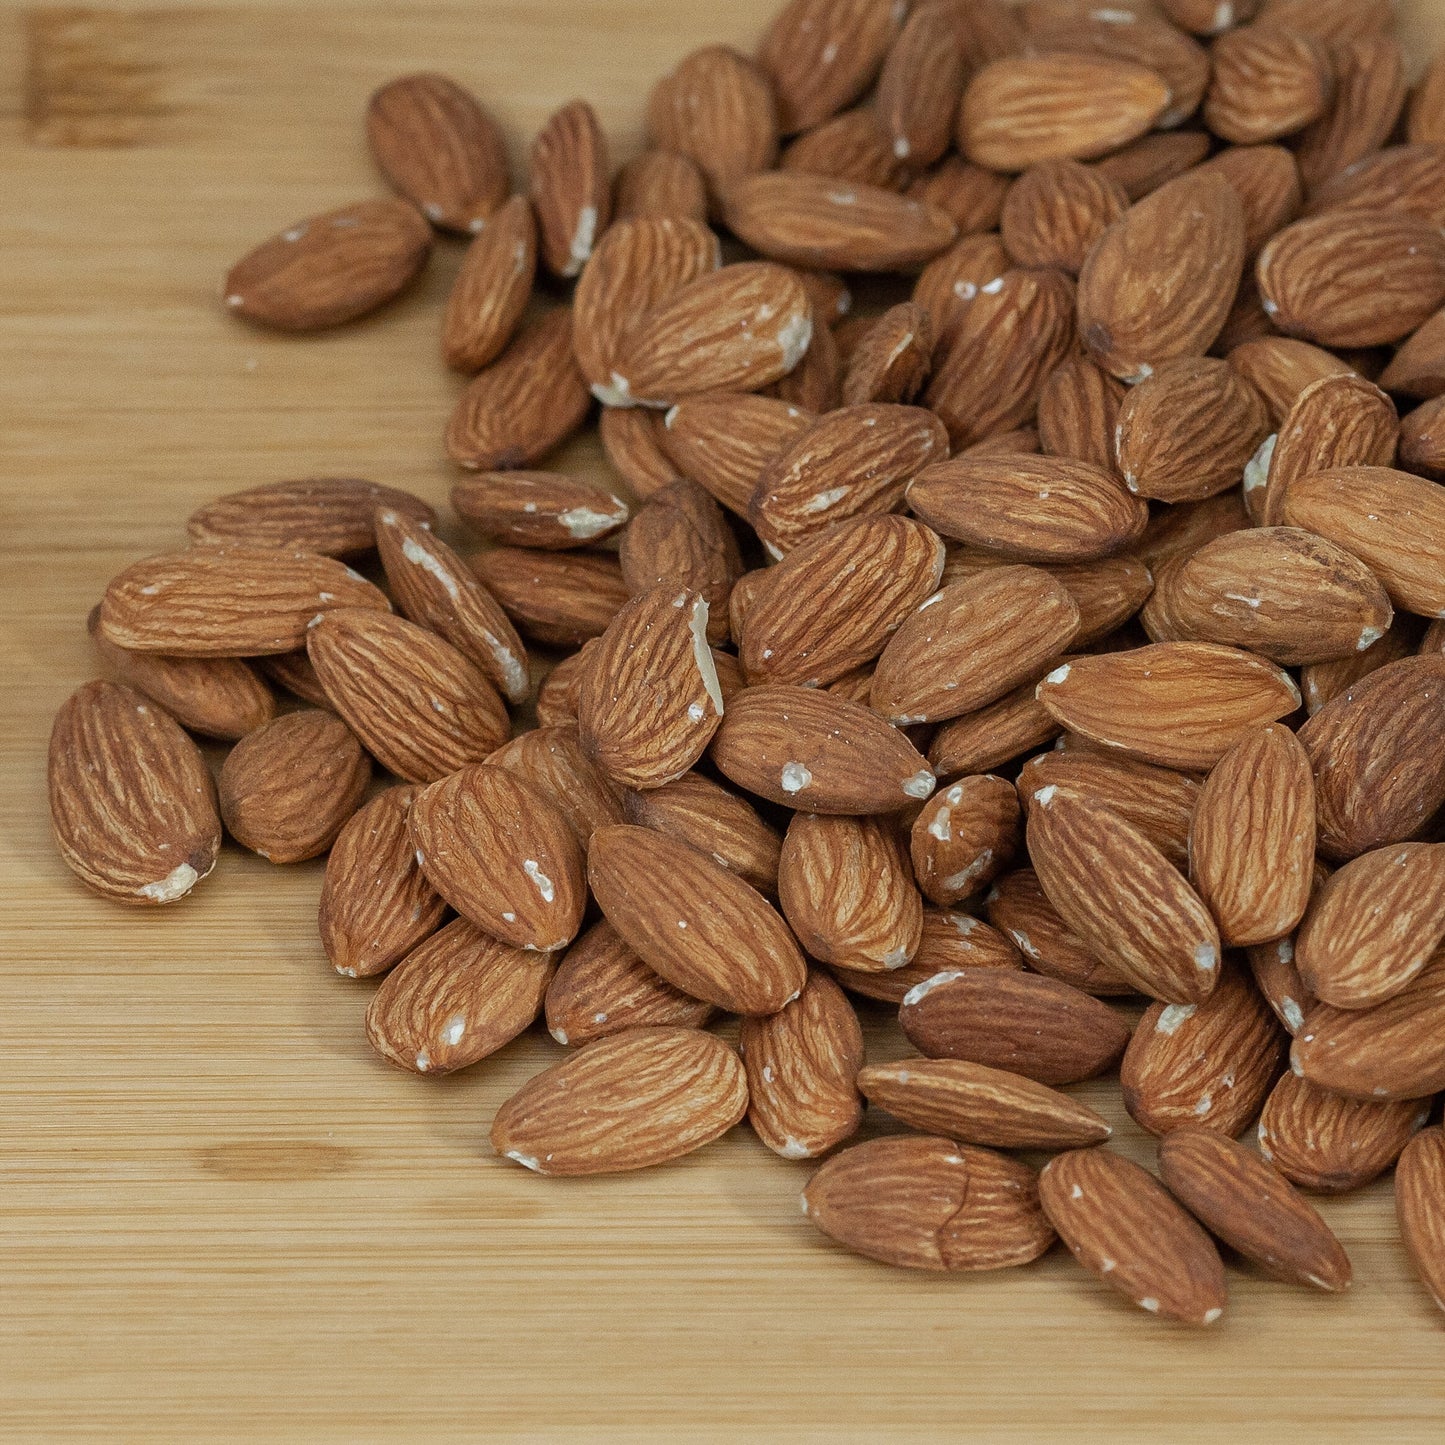 Organic Almonds in bulk